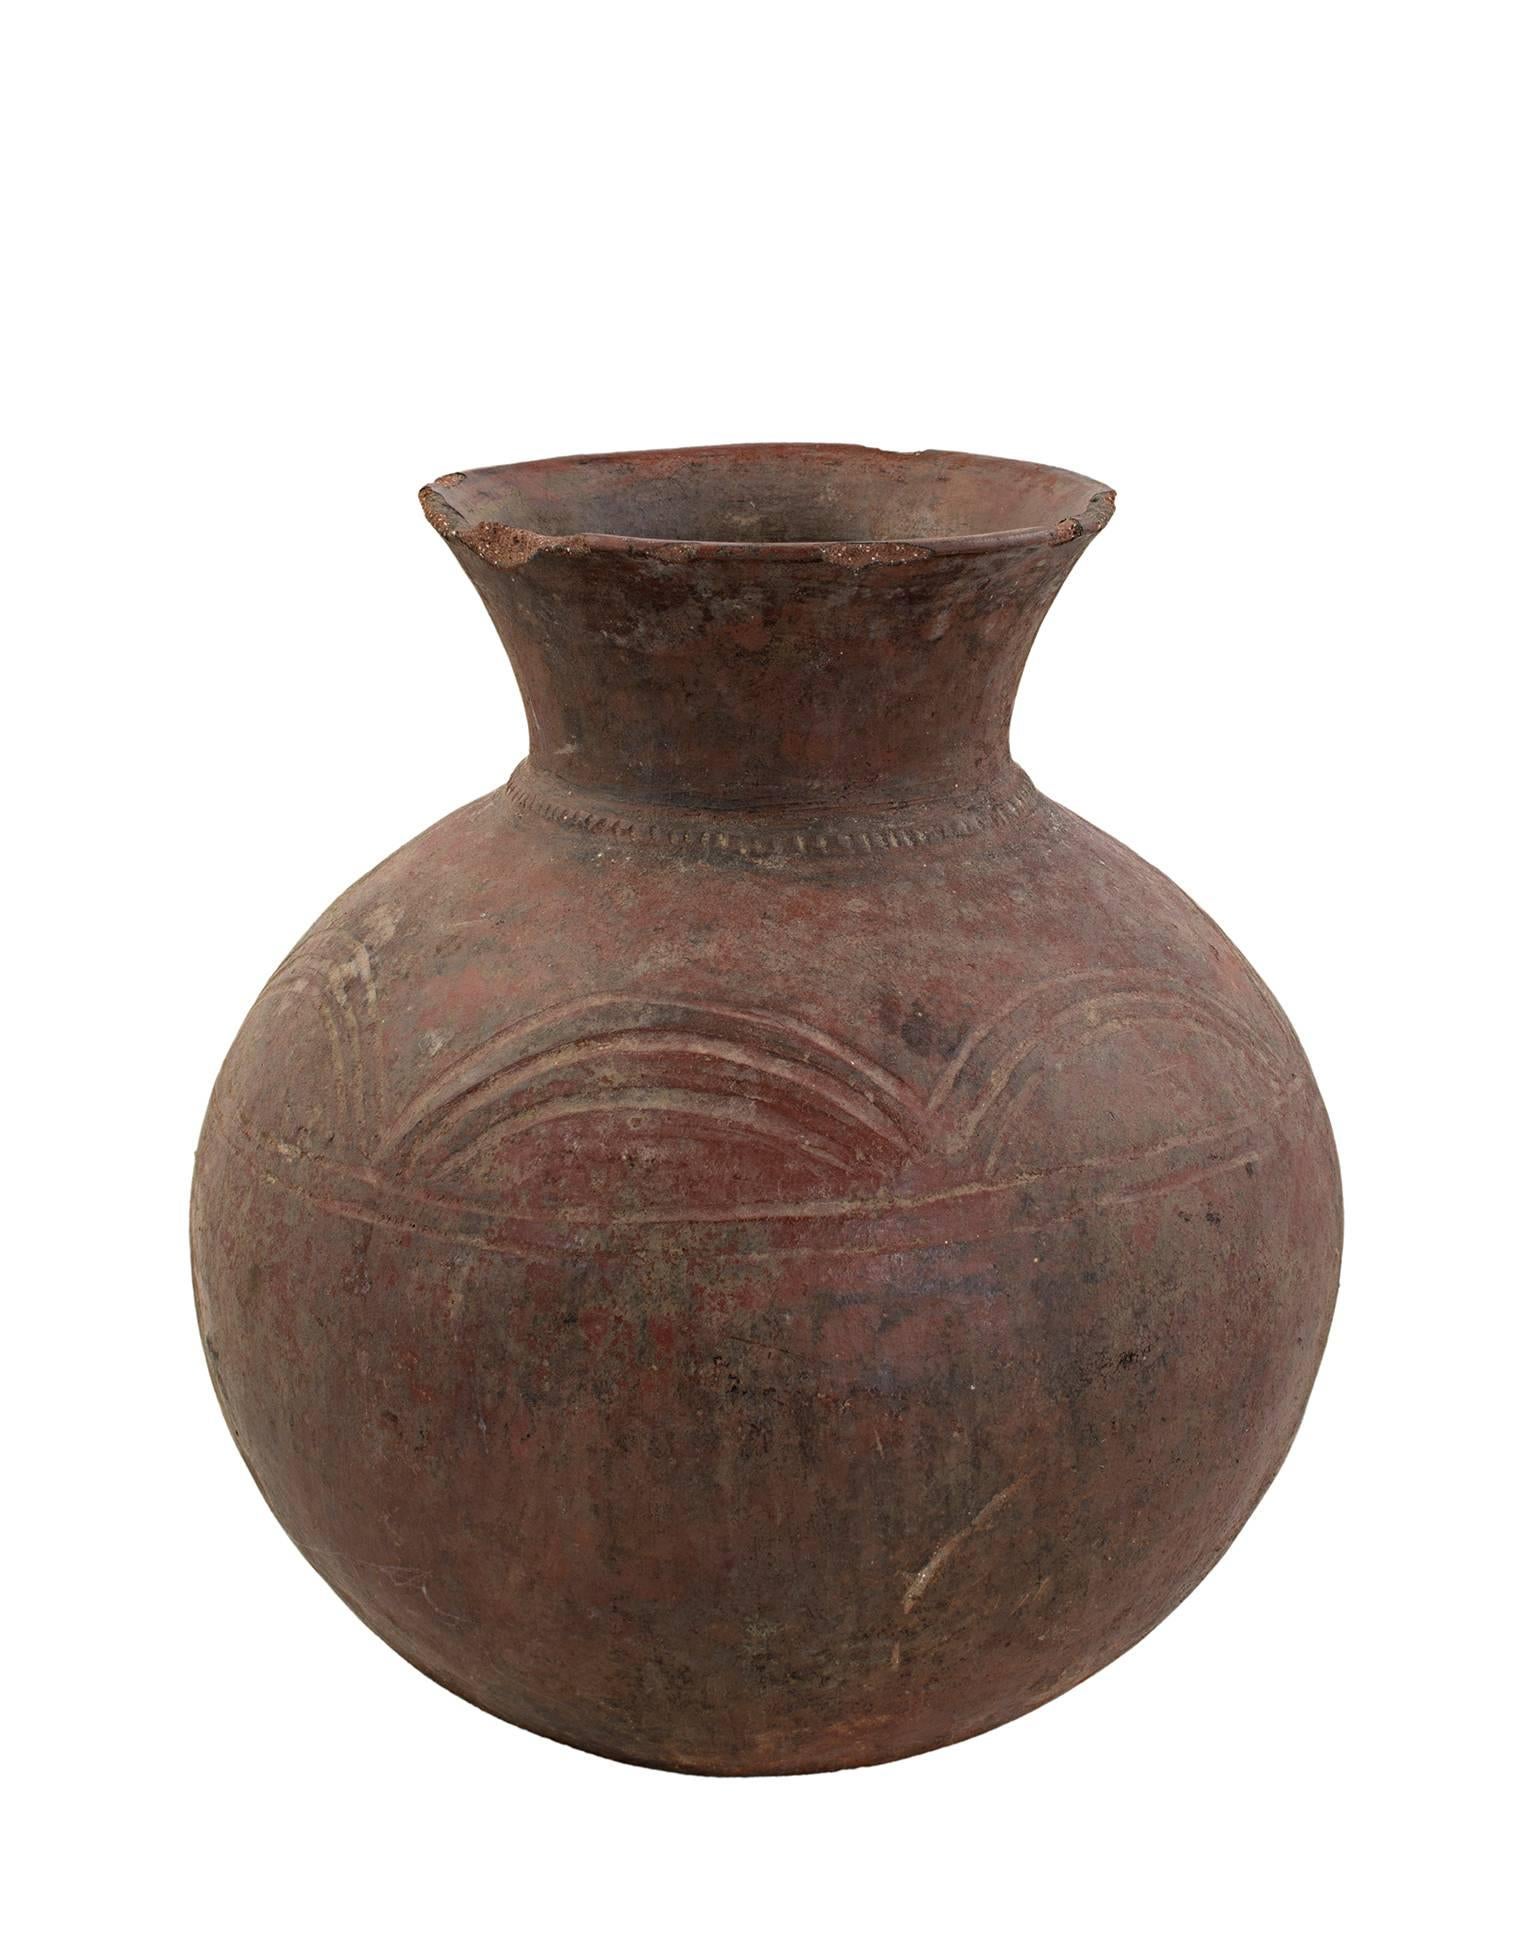 "Ceramic Pot - Mossi, Burkina Fasso (Farmer's Water Jug), " created in Africa  - Sculpture by Unknown